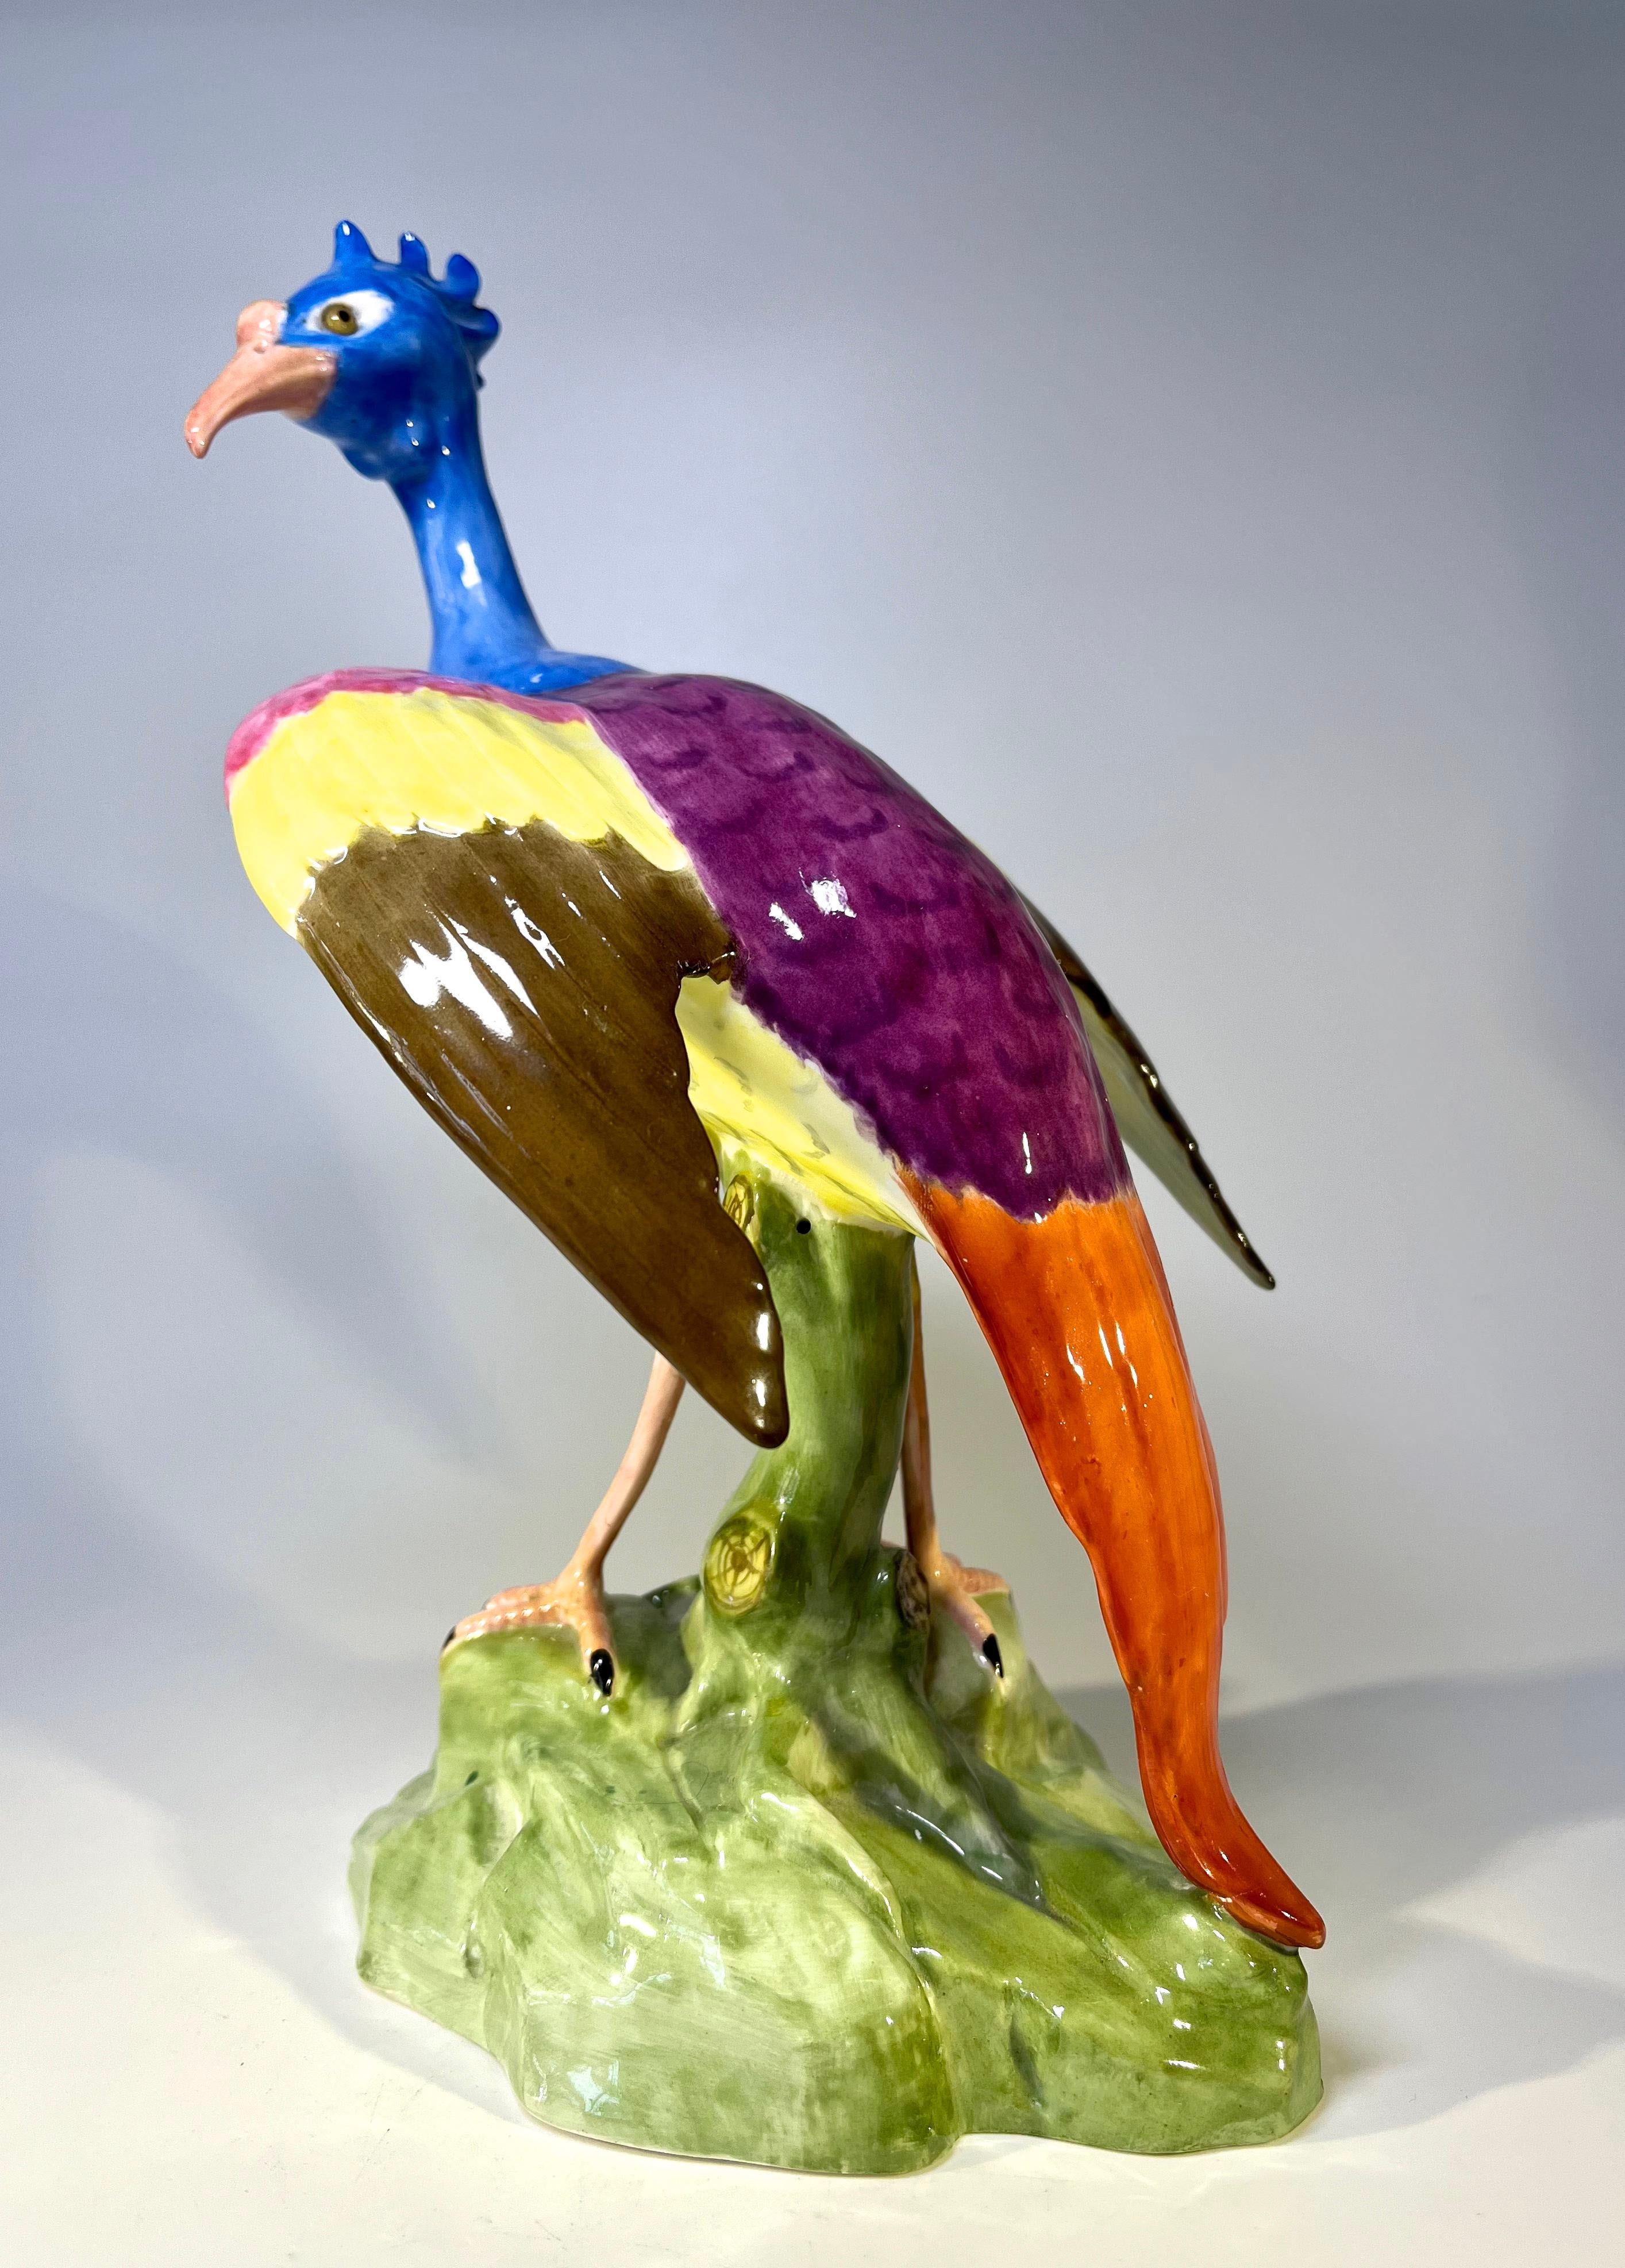 British Spectacular Copeland Spode Chelsea Fantasy Bird Bone China Figurine c 1915-20 For Sale